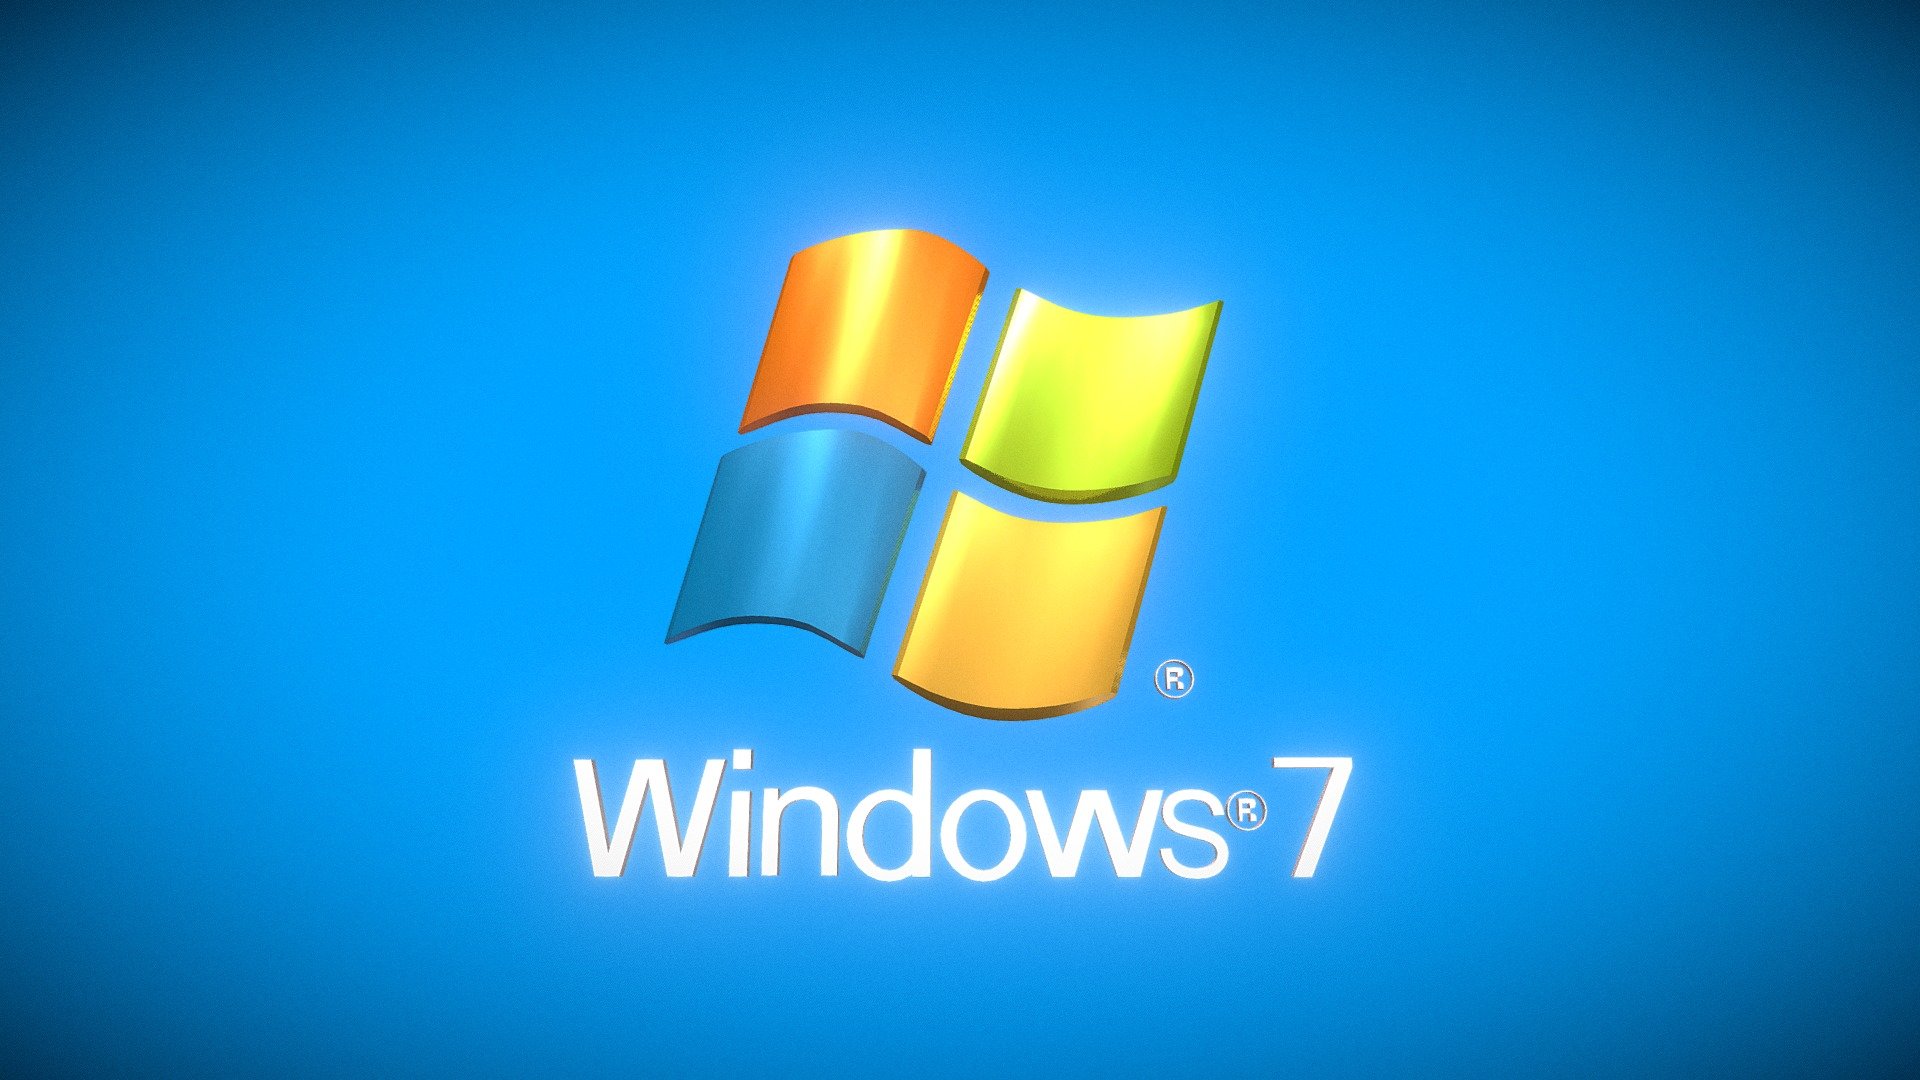 microsoft teams free download for laptop windows 7